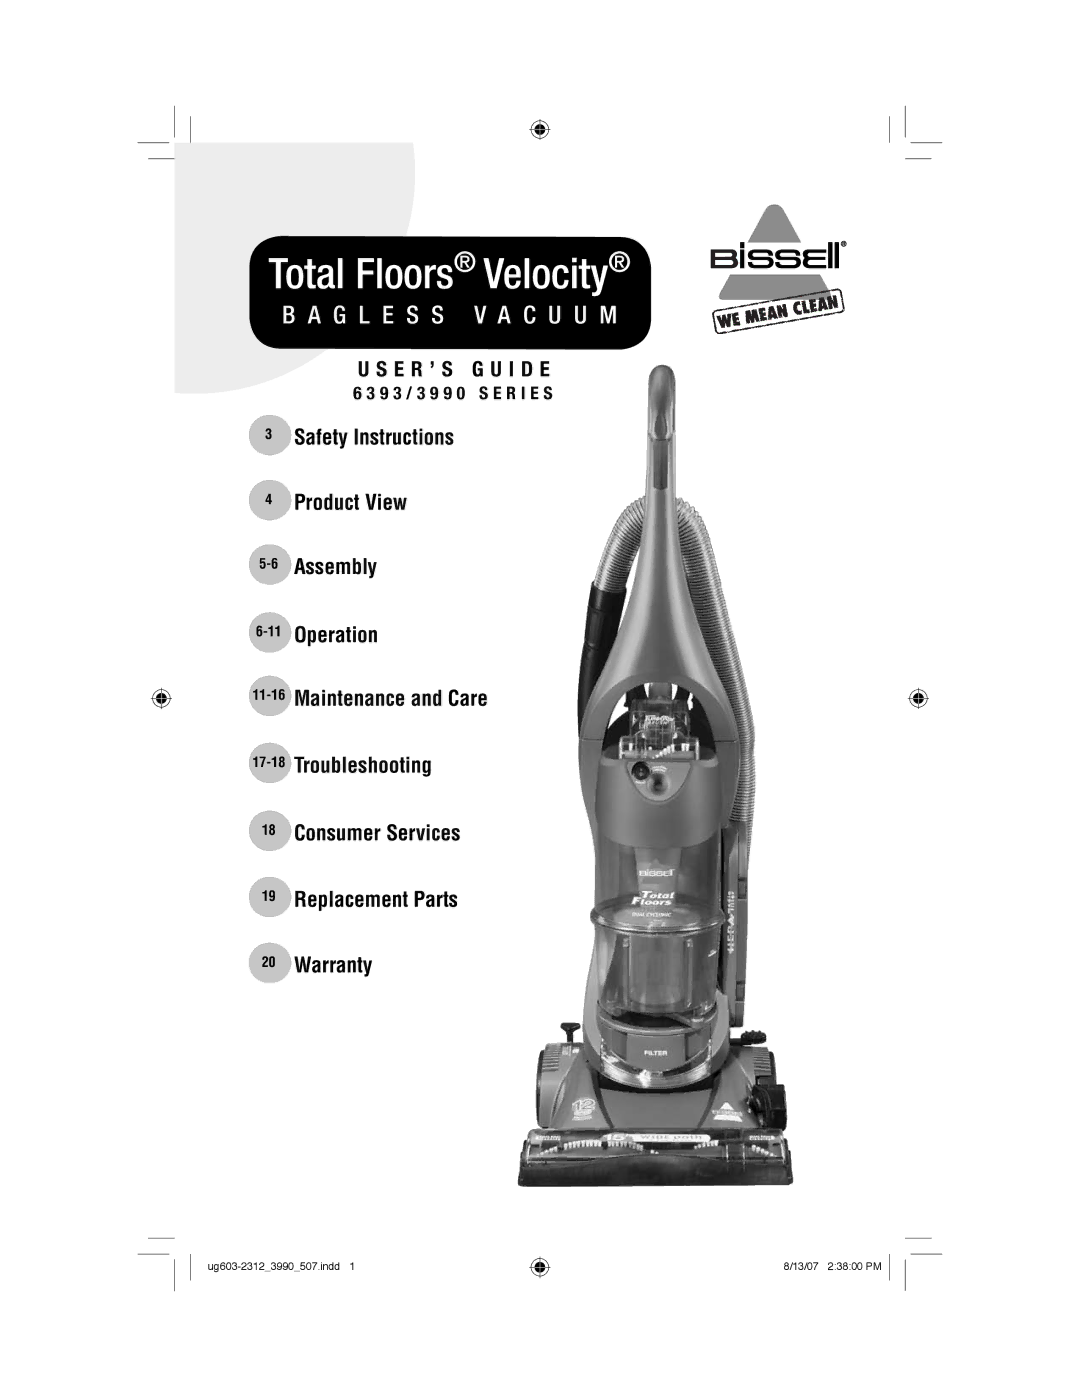 Bissell 3990 warranty Total Floors Velocity, 9 3 / 3 9 9 0 S E R I E S 